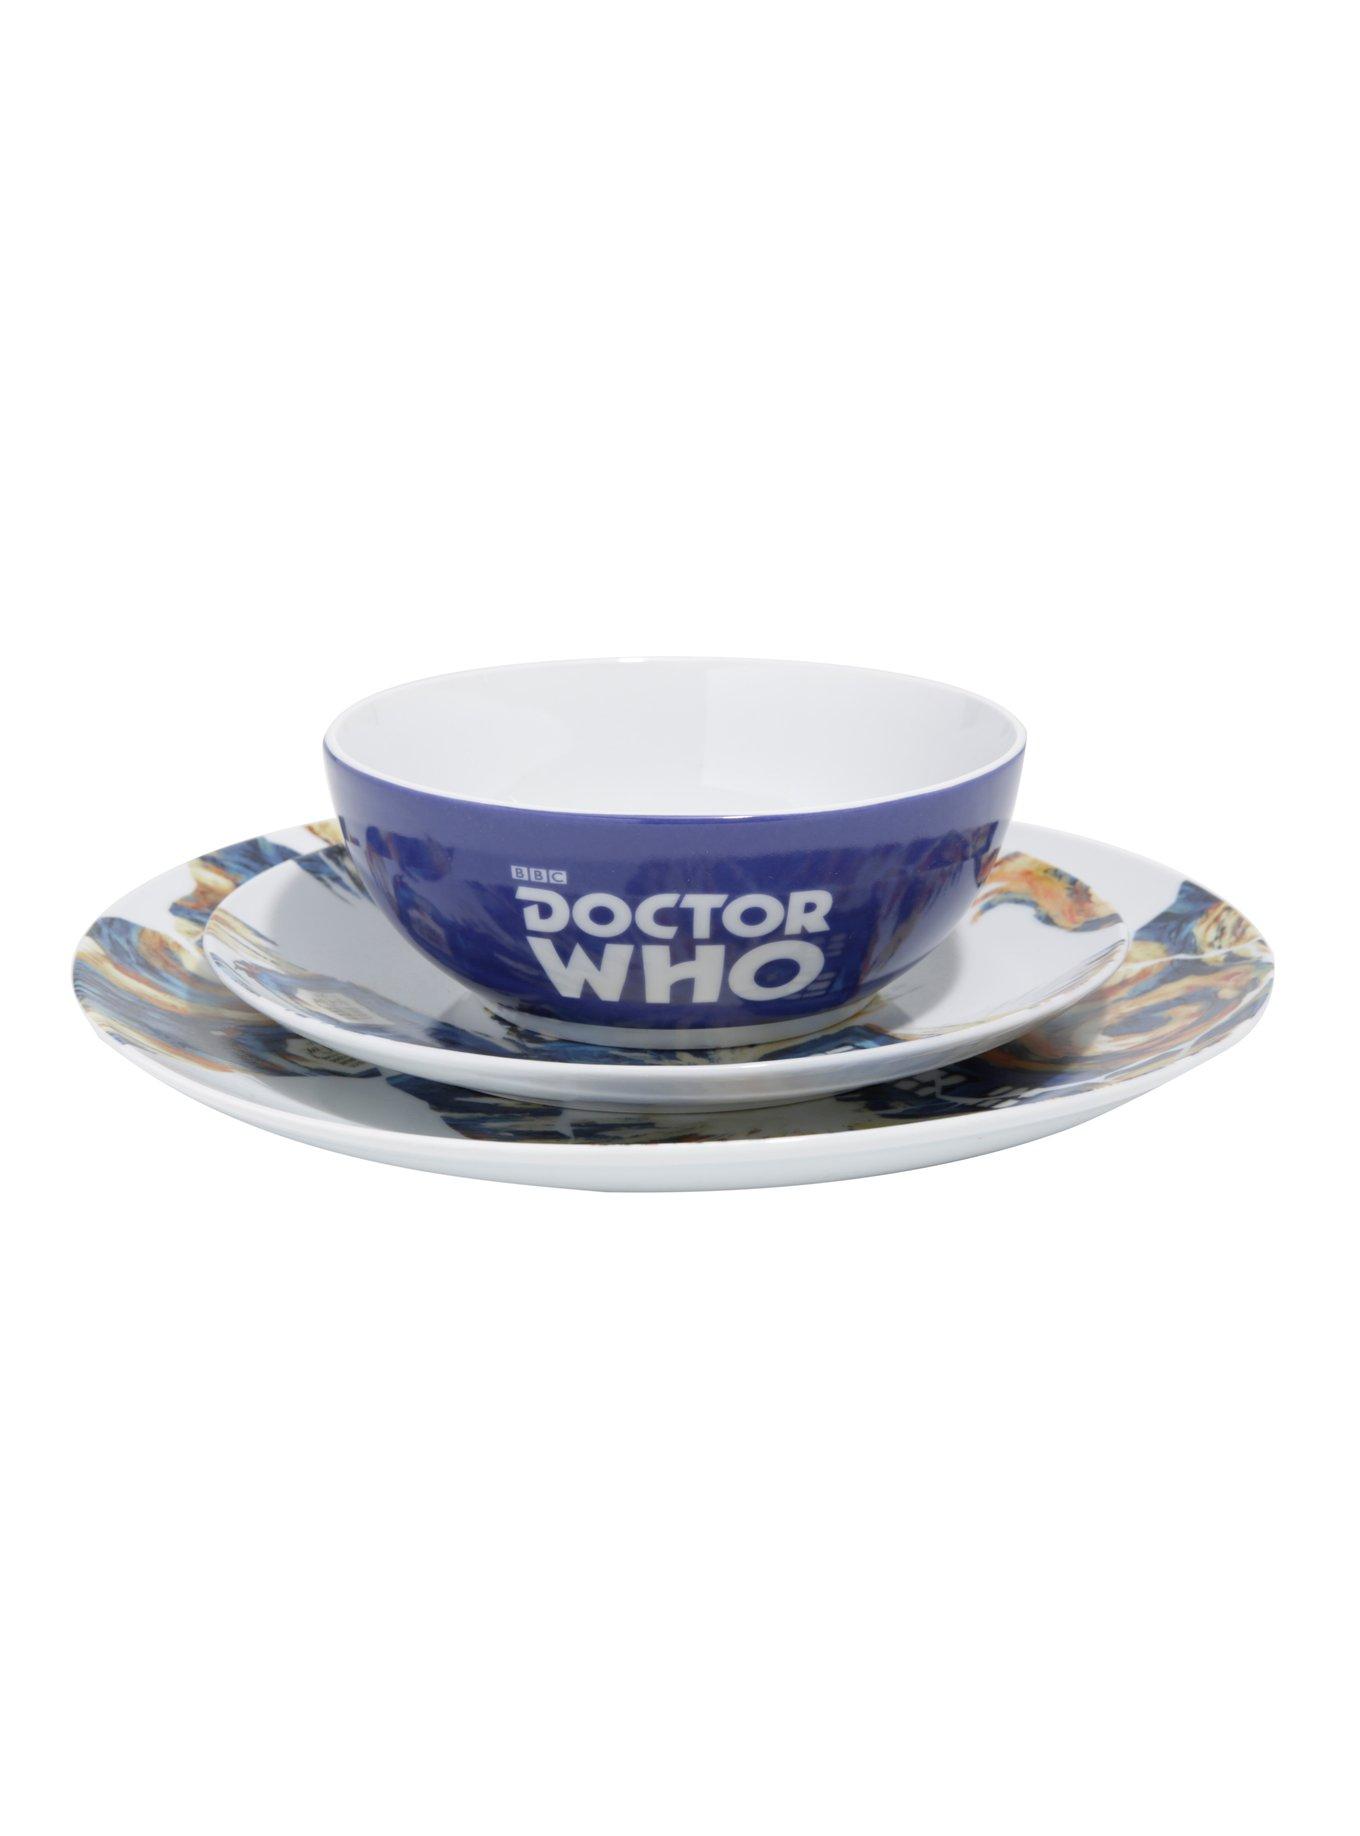 BBC Doctor Who Ceramic Plates Exploding Tardis 10" Set of Four BRAND NEW!!! 